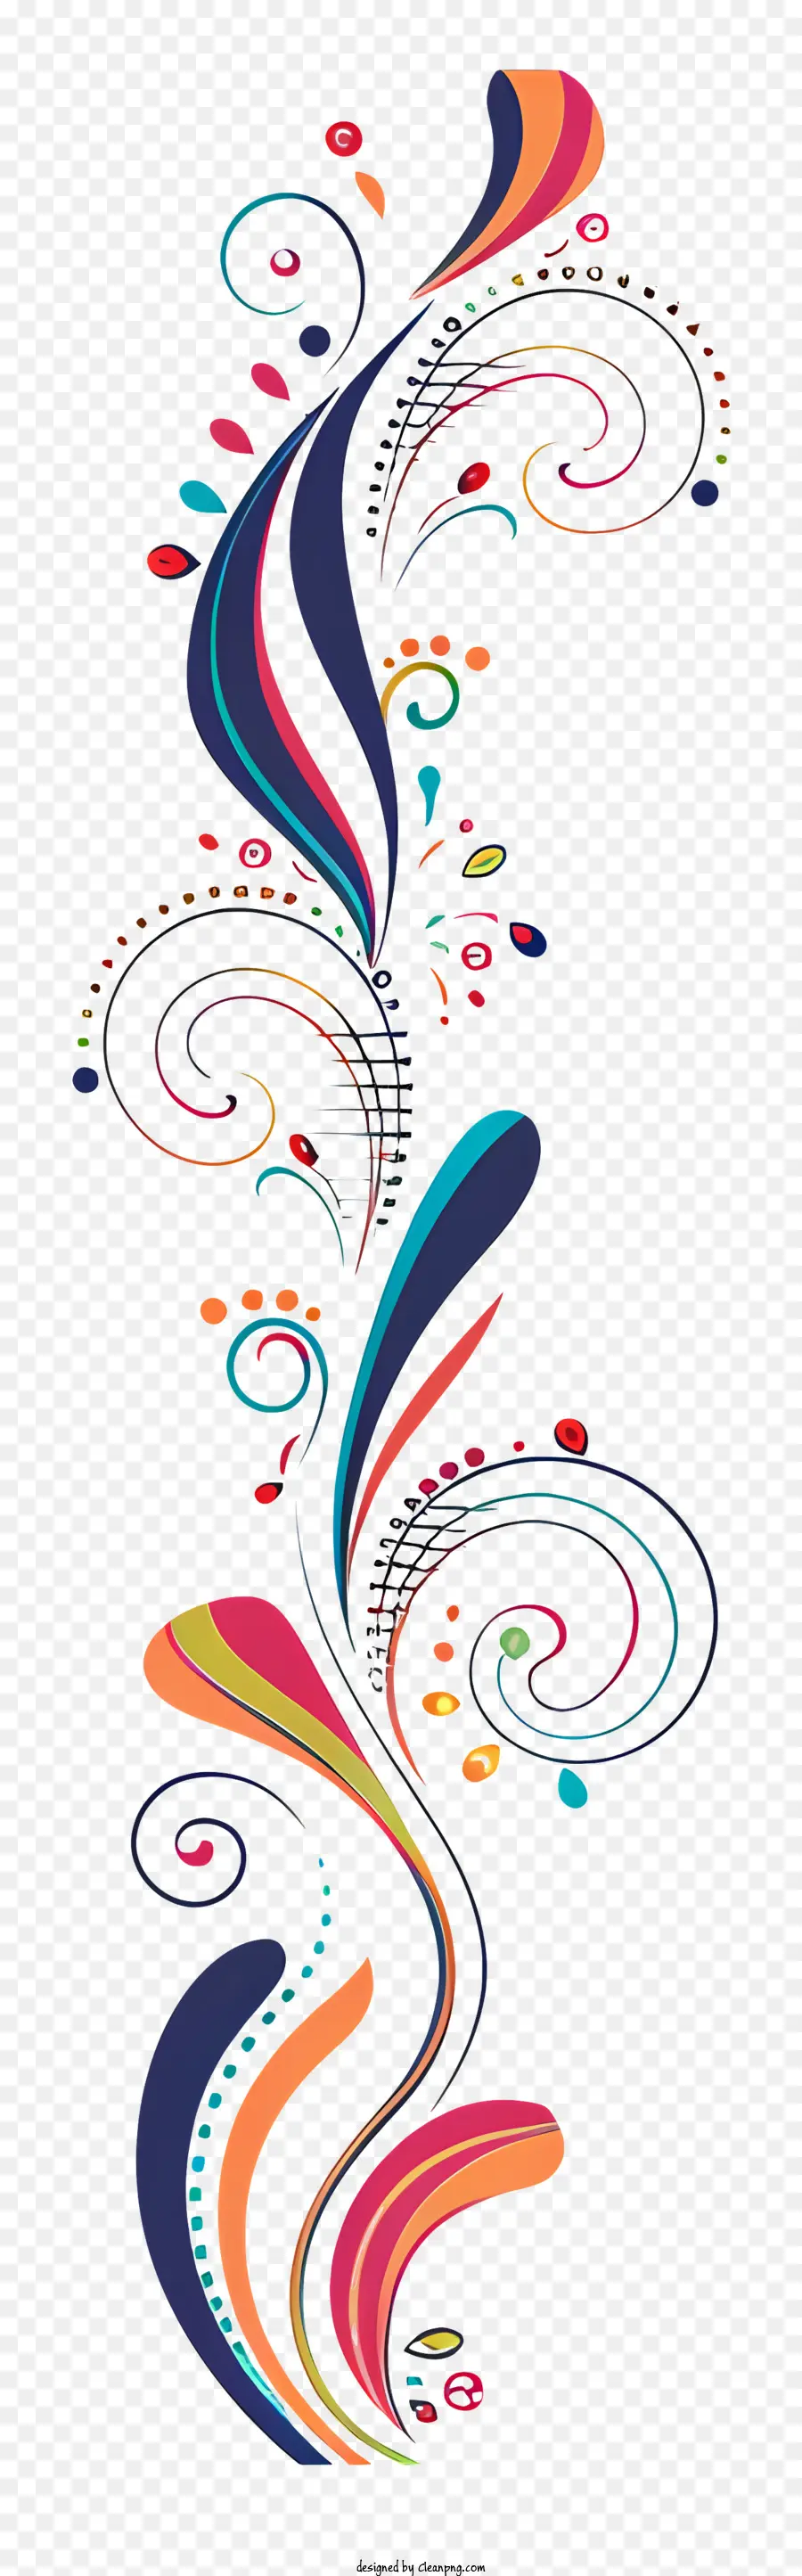 fancy decorative line abstract art colorful swirls circular design twisting patterns